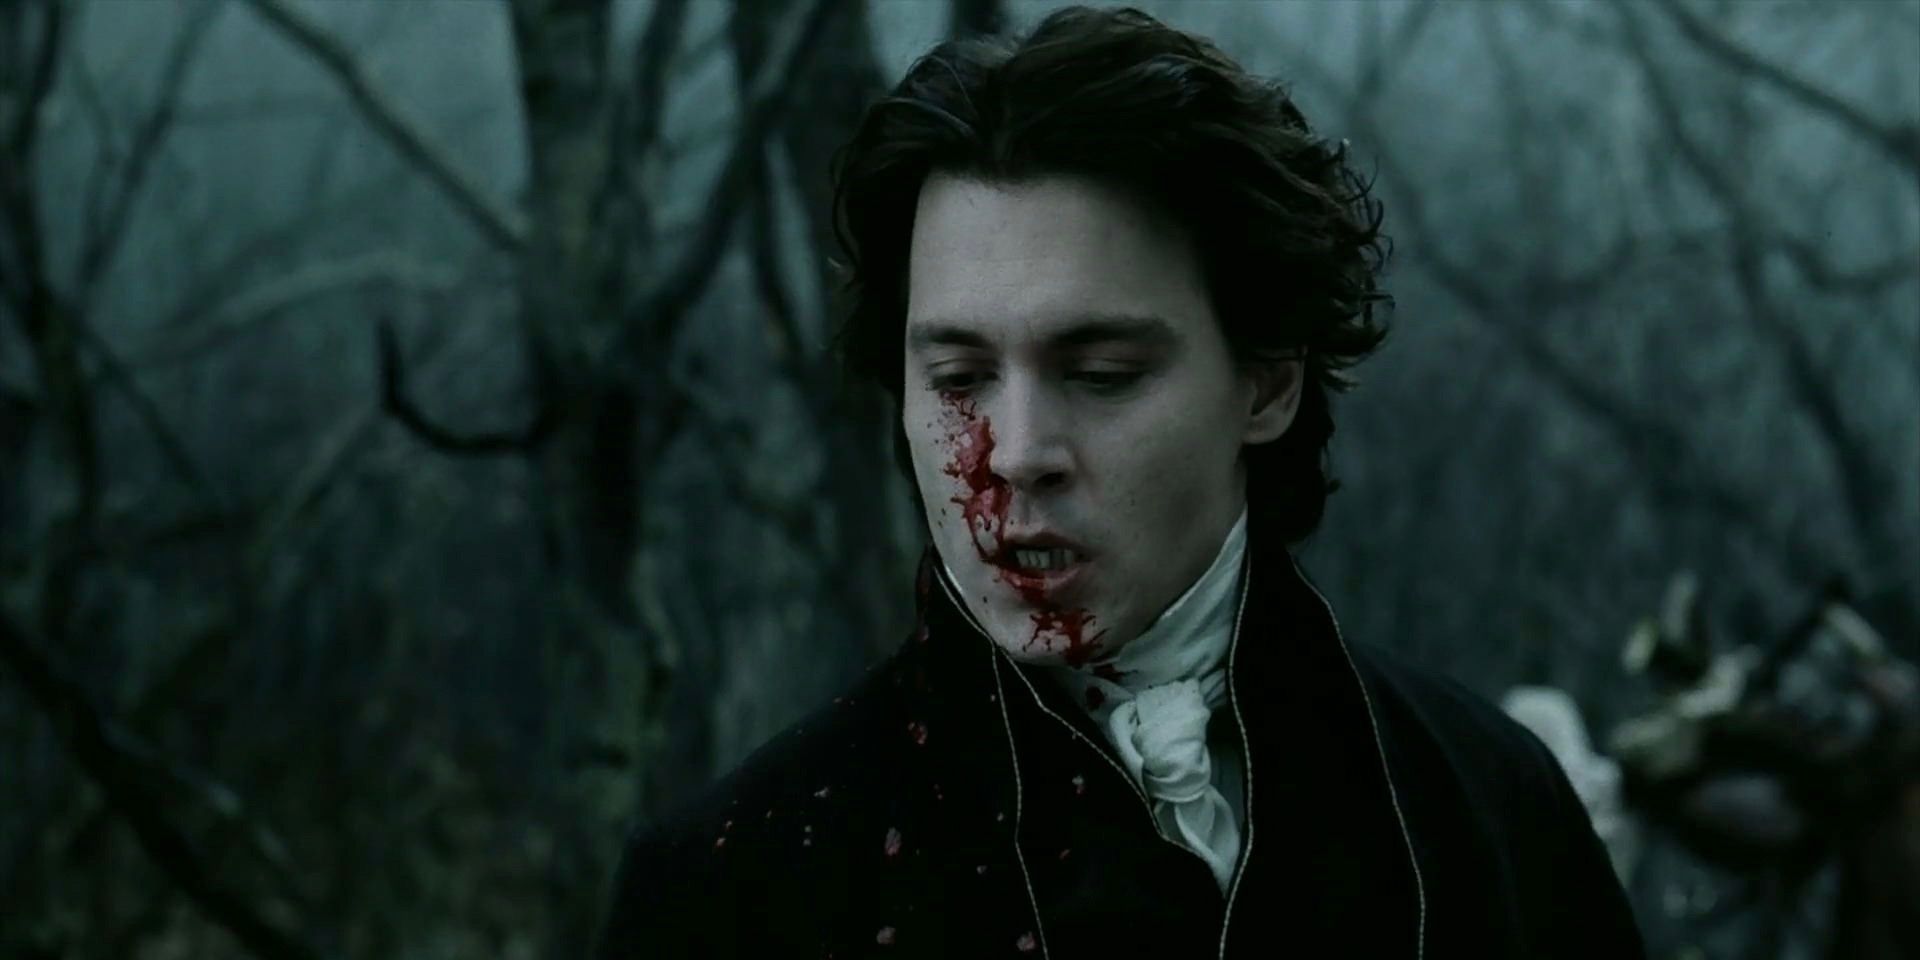 Blood Splattered Johnny Depp in Sleepy Hollow